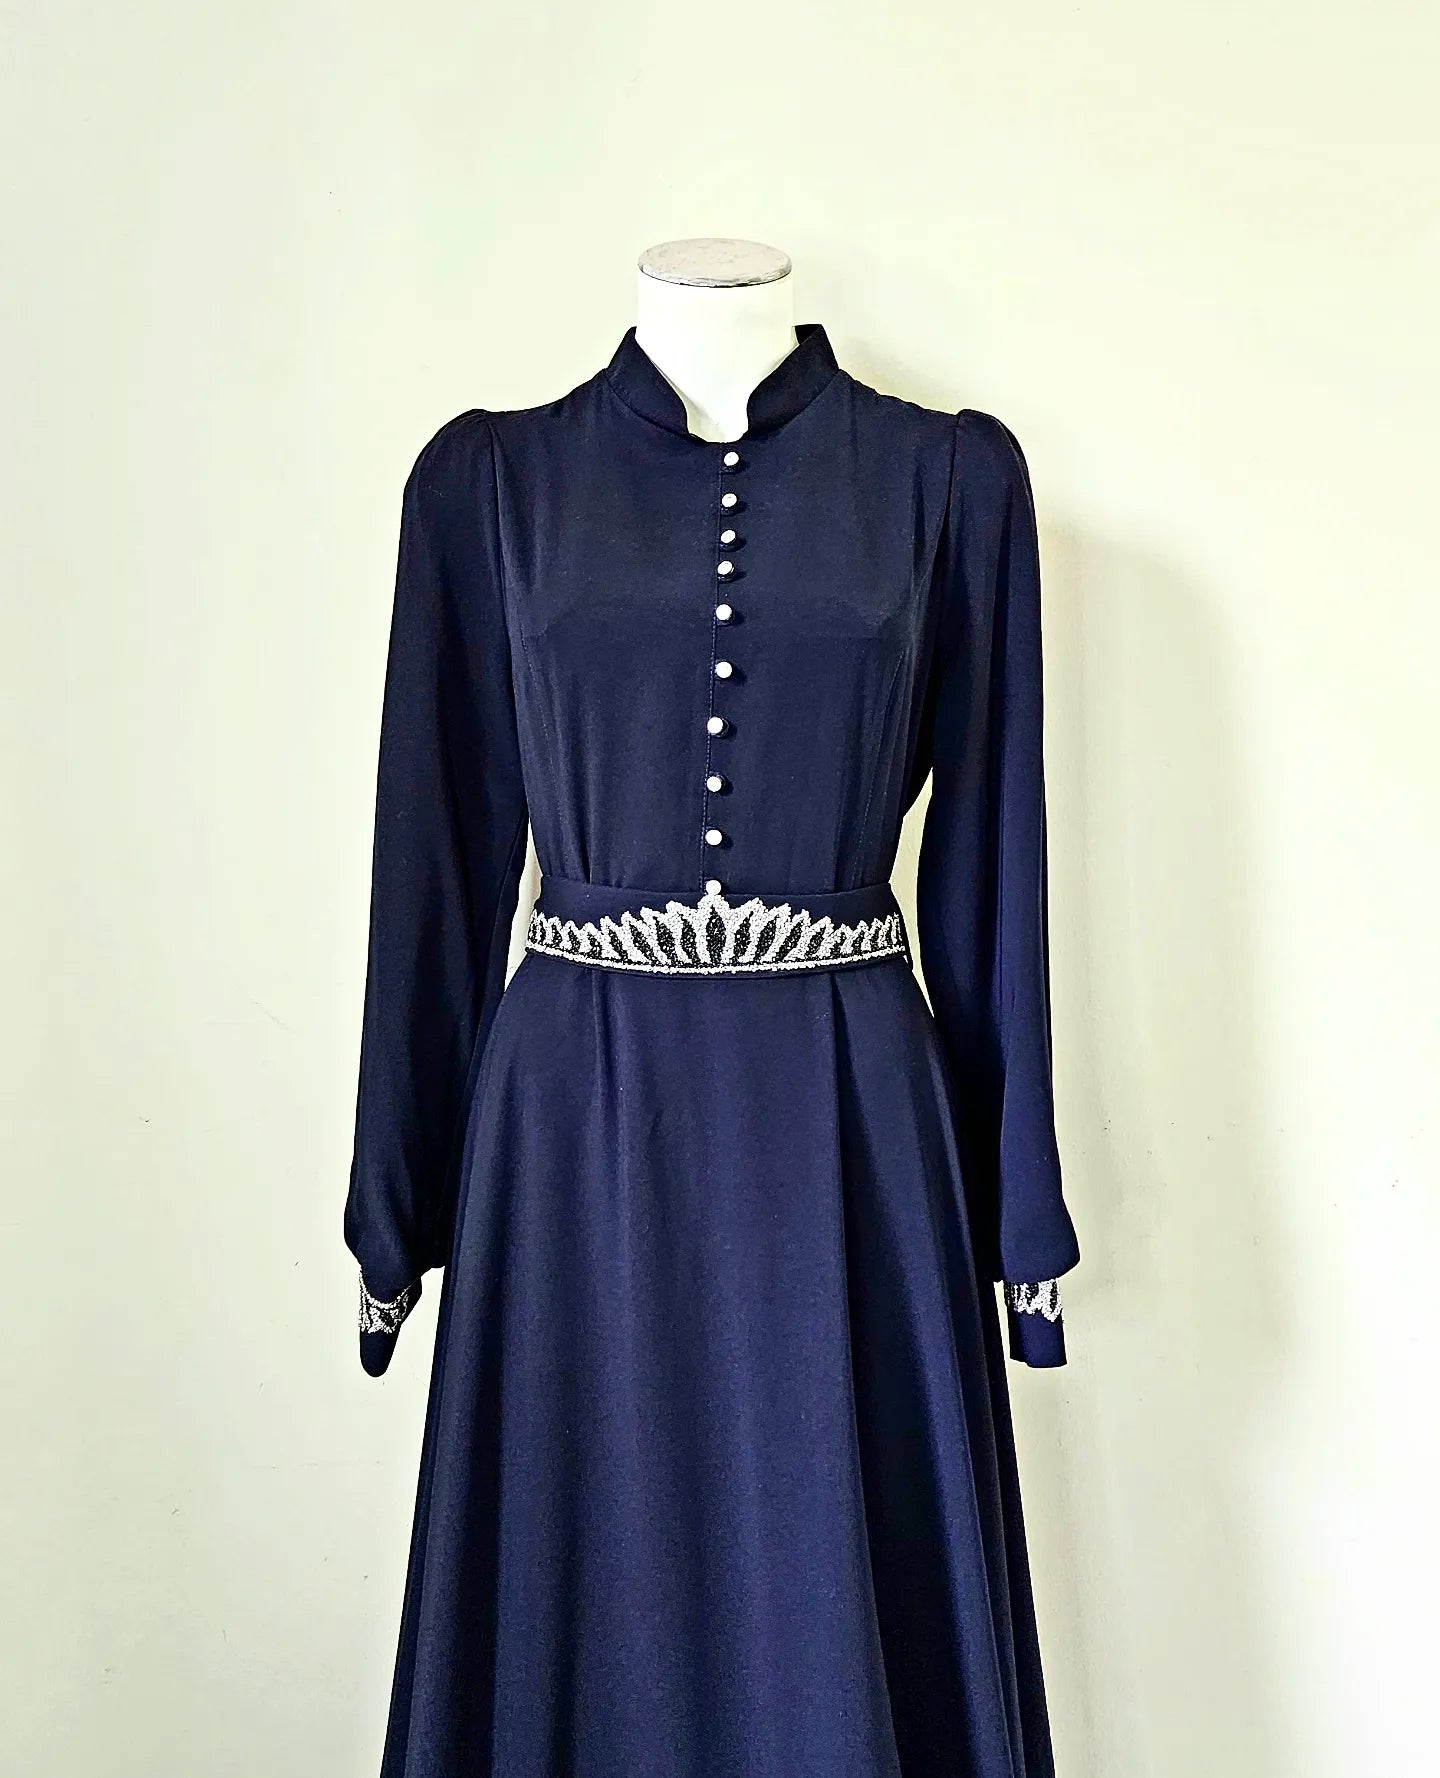 Beautiful Dress with sequin details belt